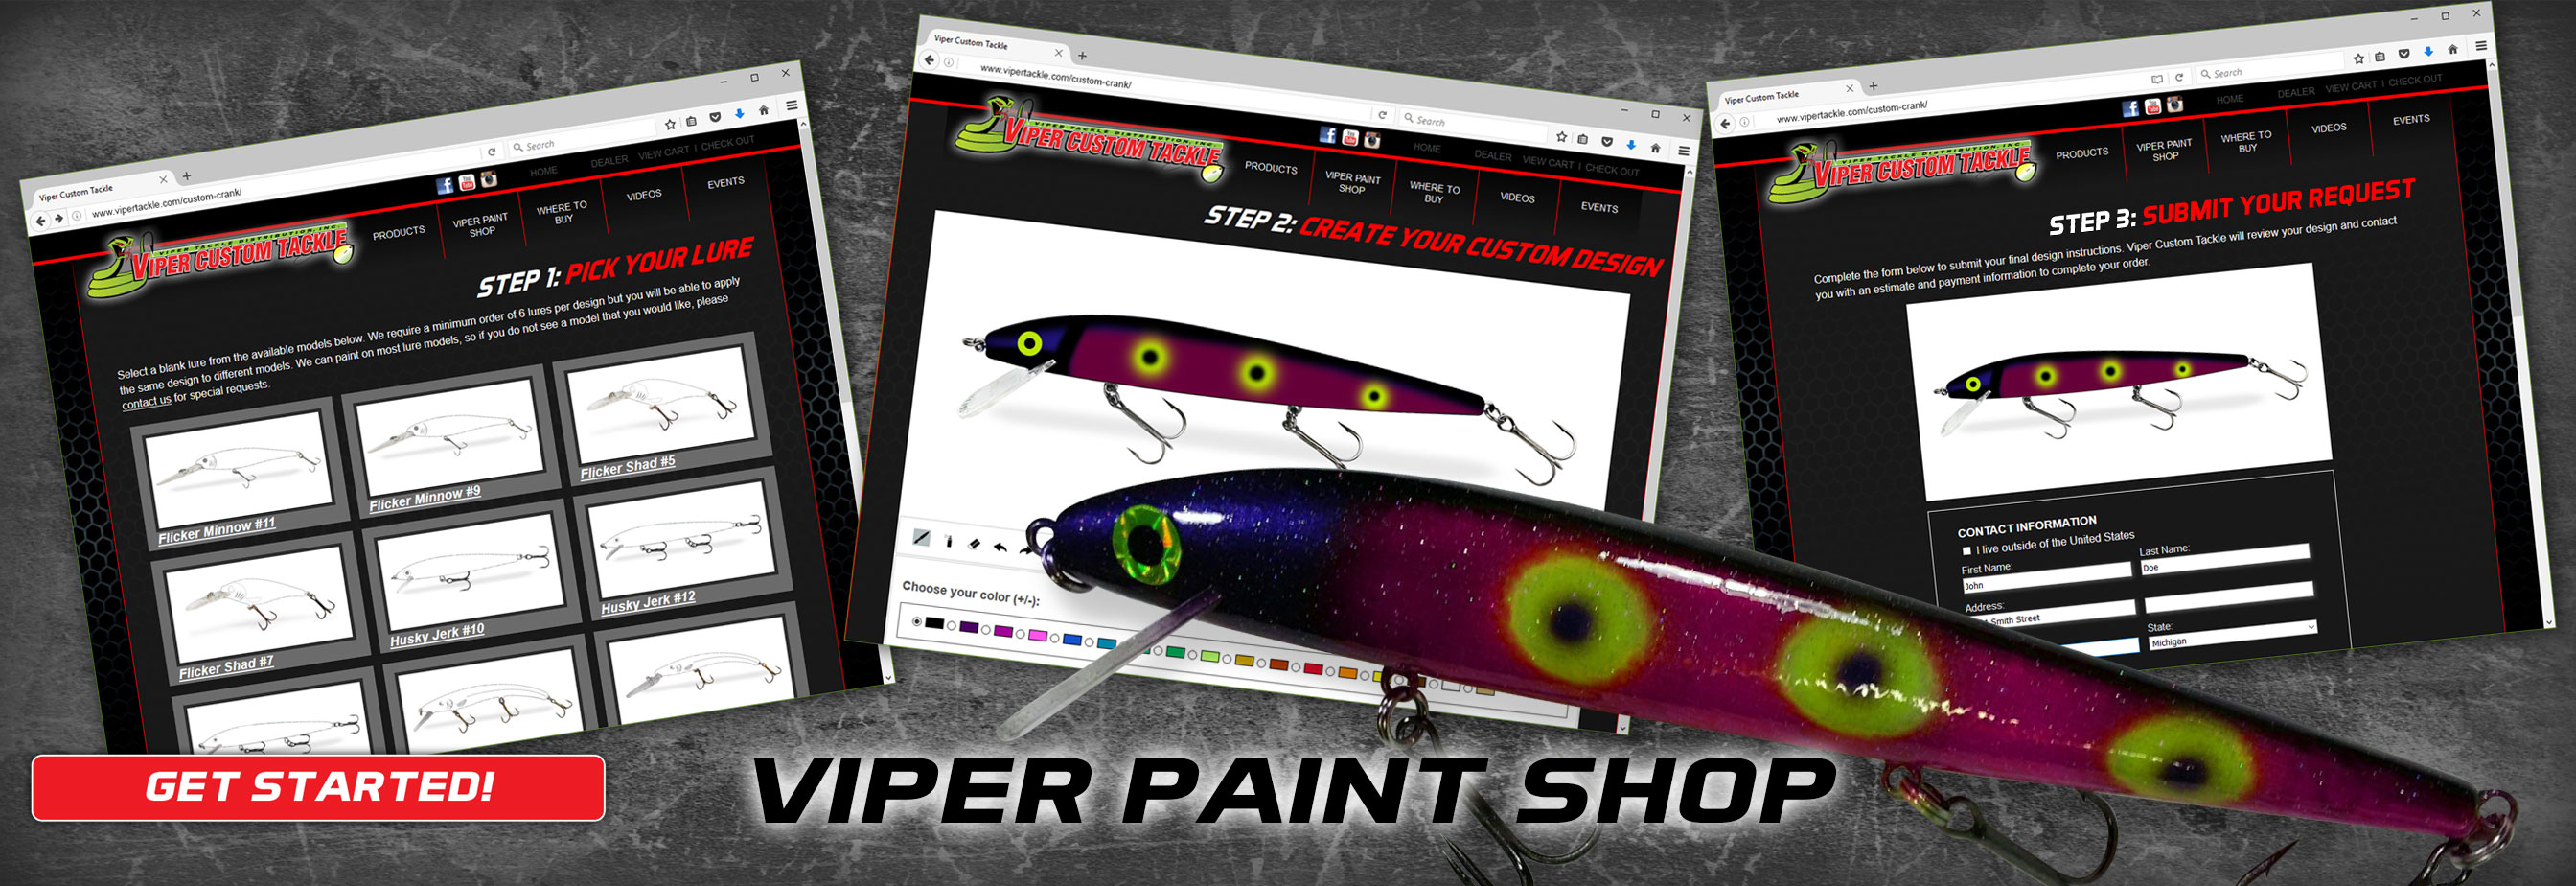 Viper Paint Shop - Create Your Own Custom Cranks!